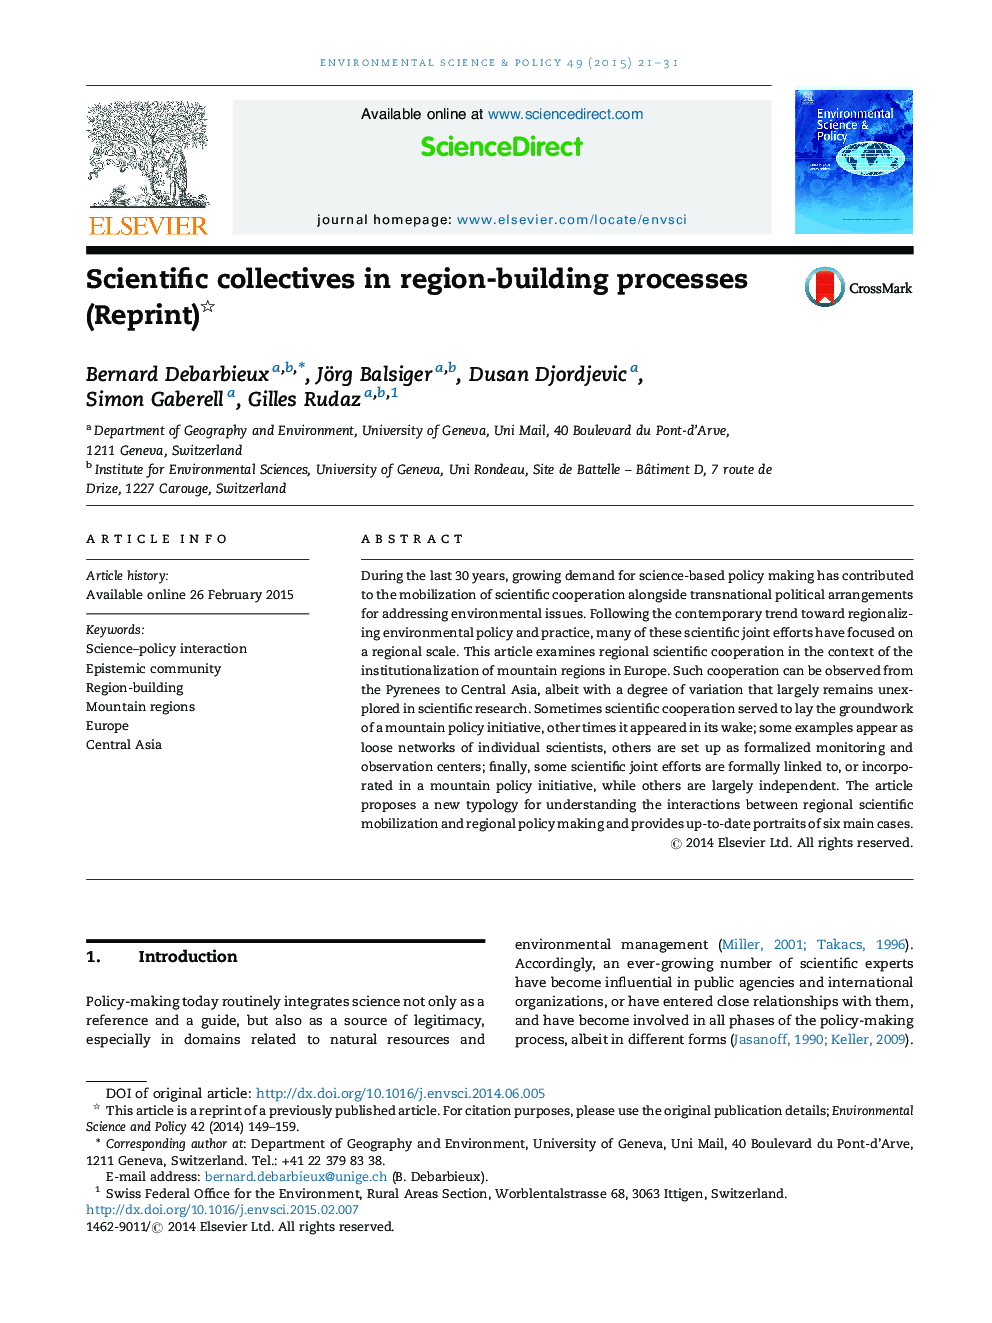 Scientific collectives in region-building processes (Reprint) 